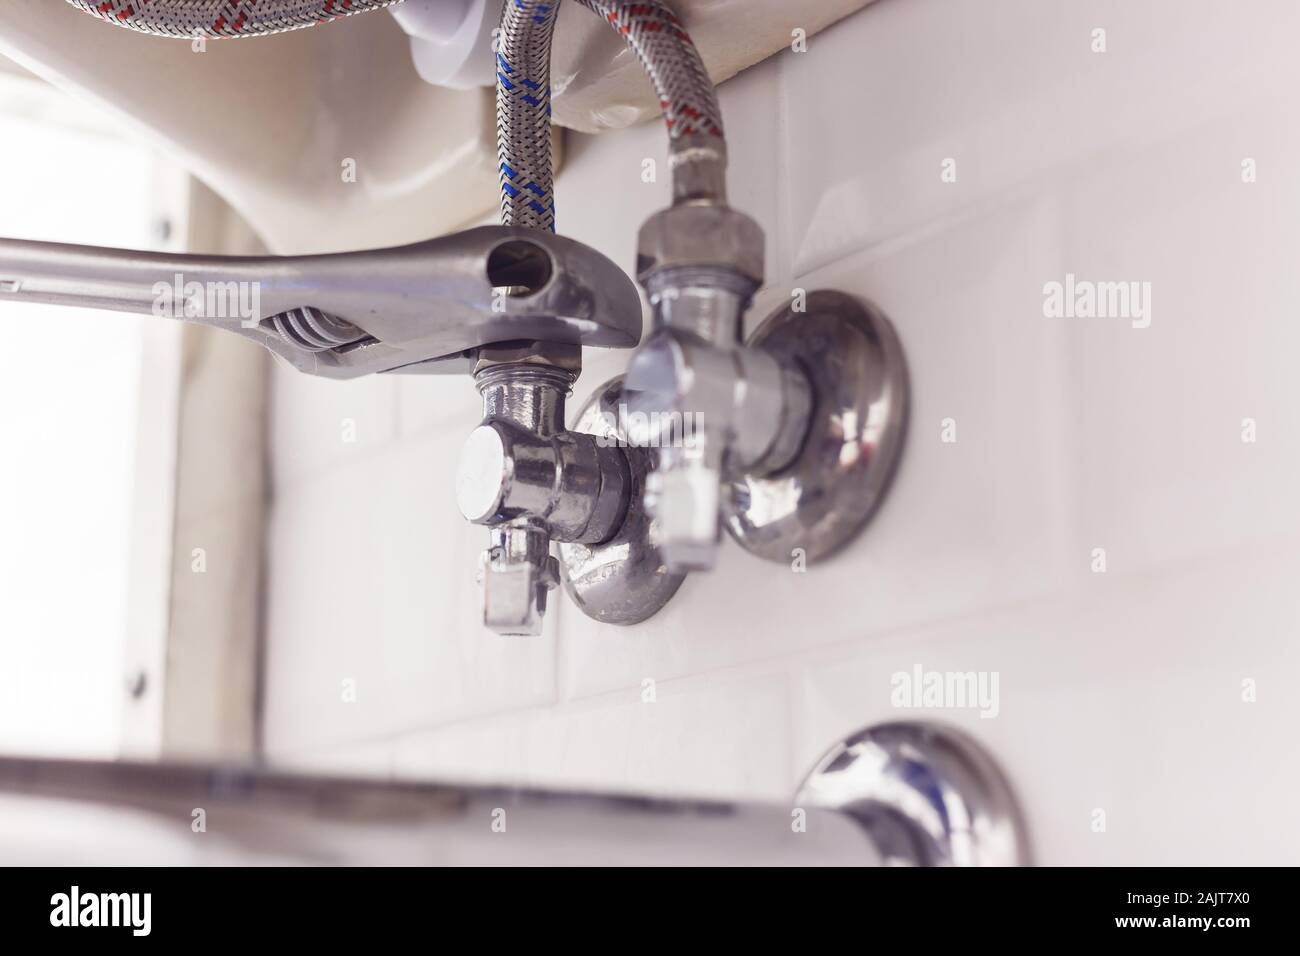 Plumber turns nut on angle valve under wash basin using spreading wrench. Stock Photo